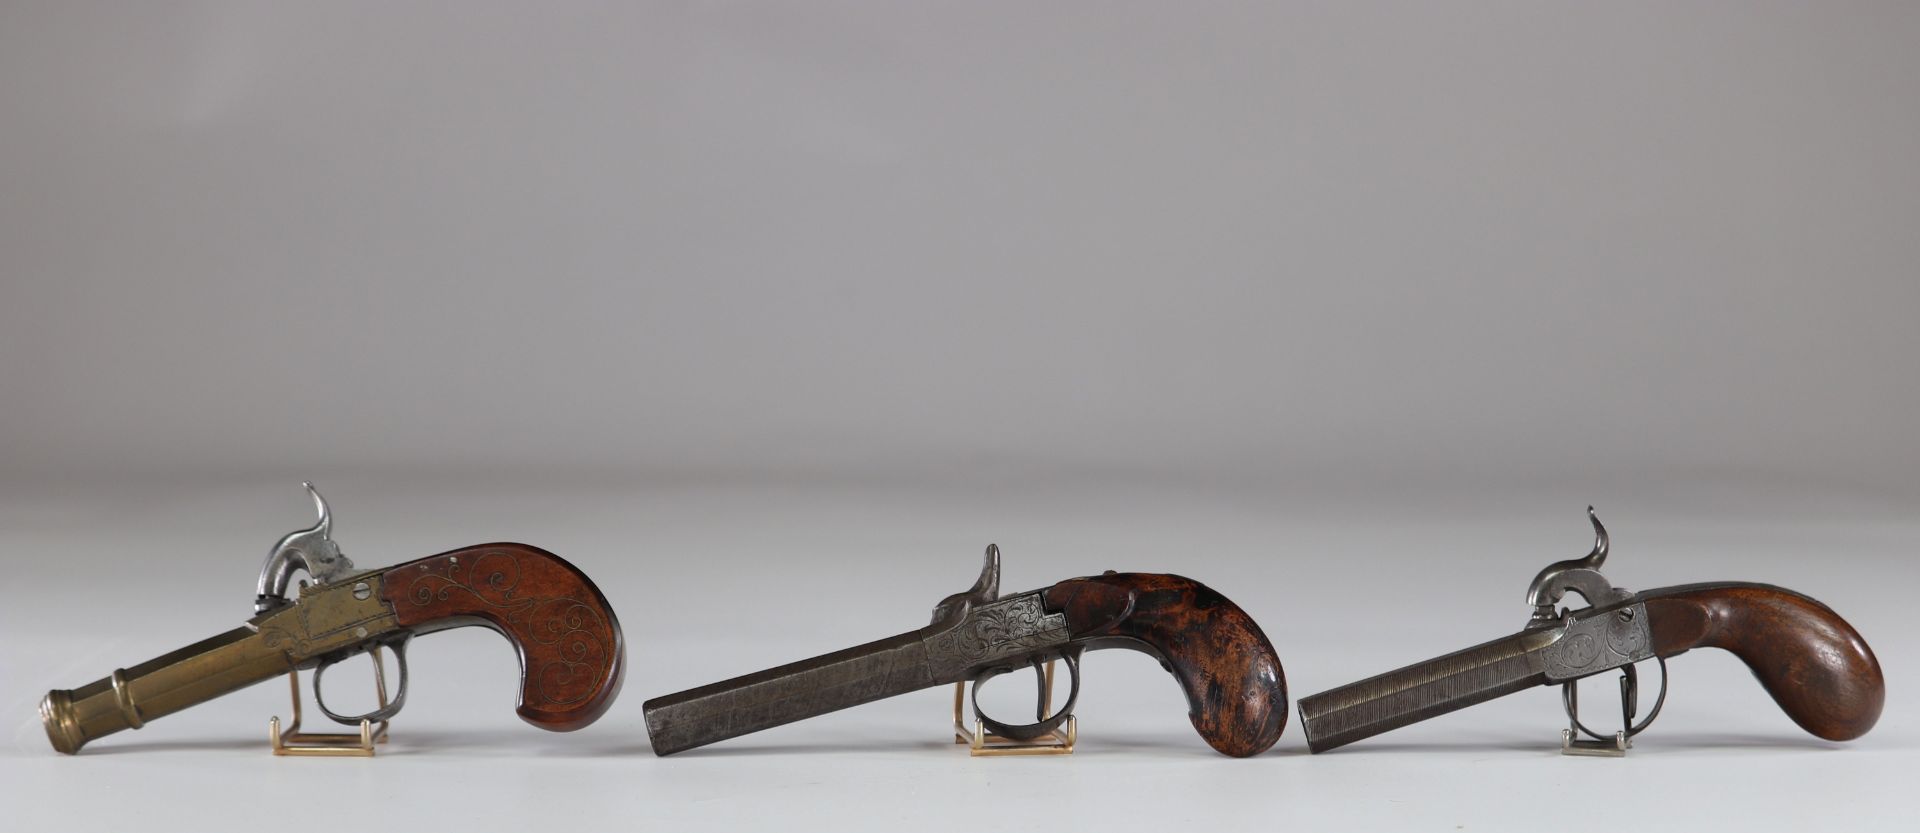 Old pistols set of 3